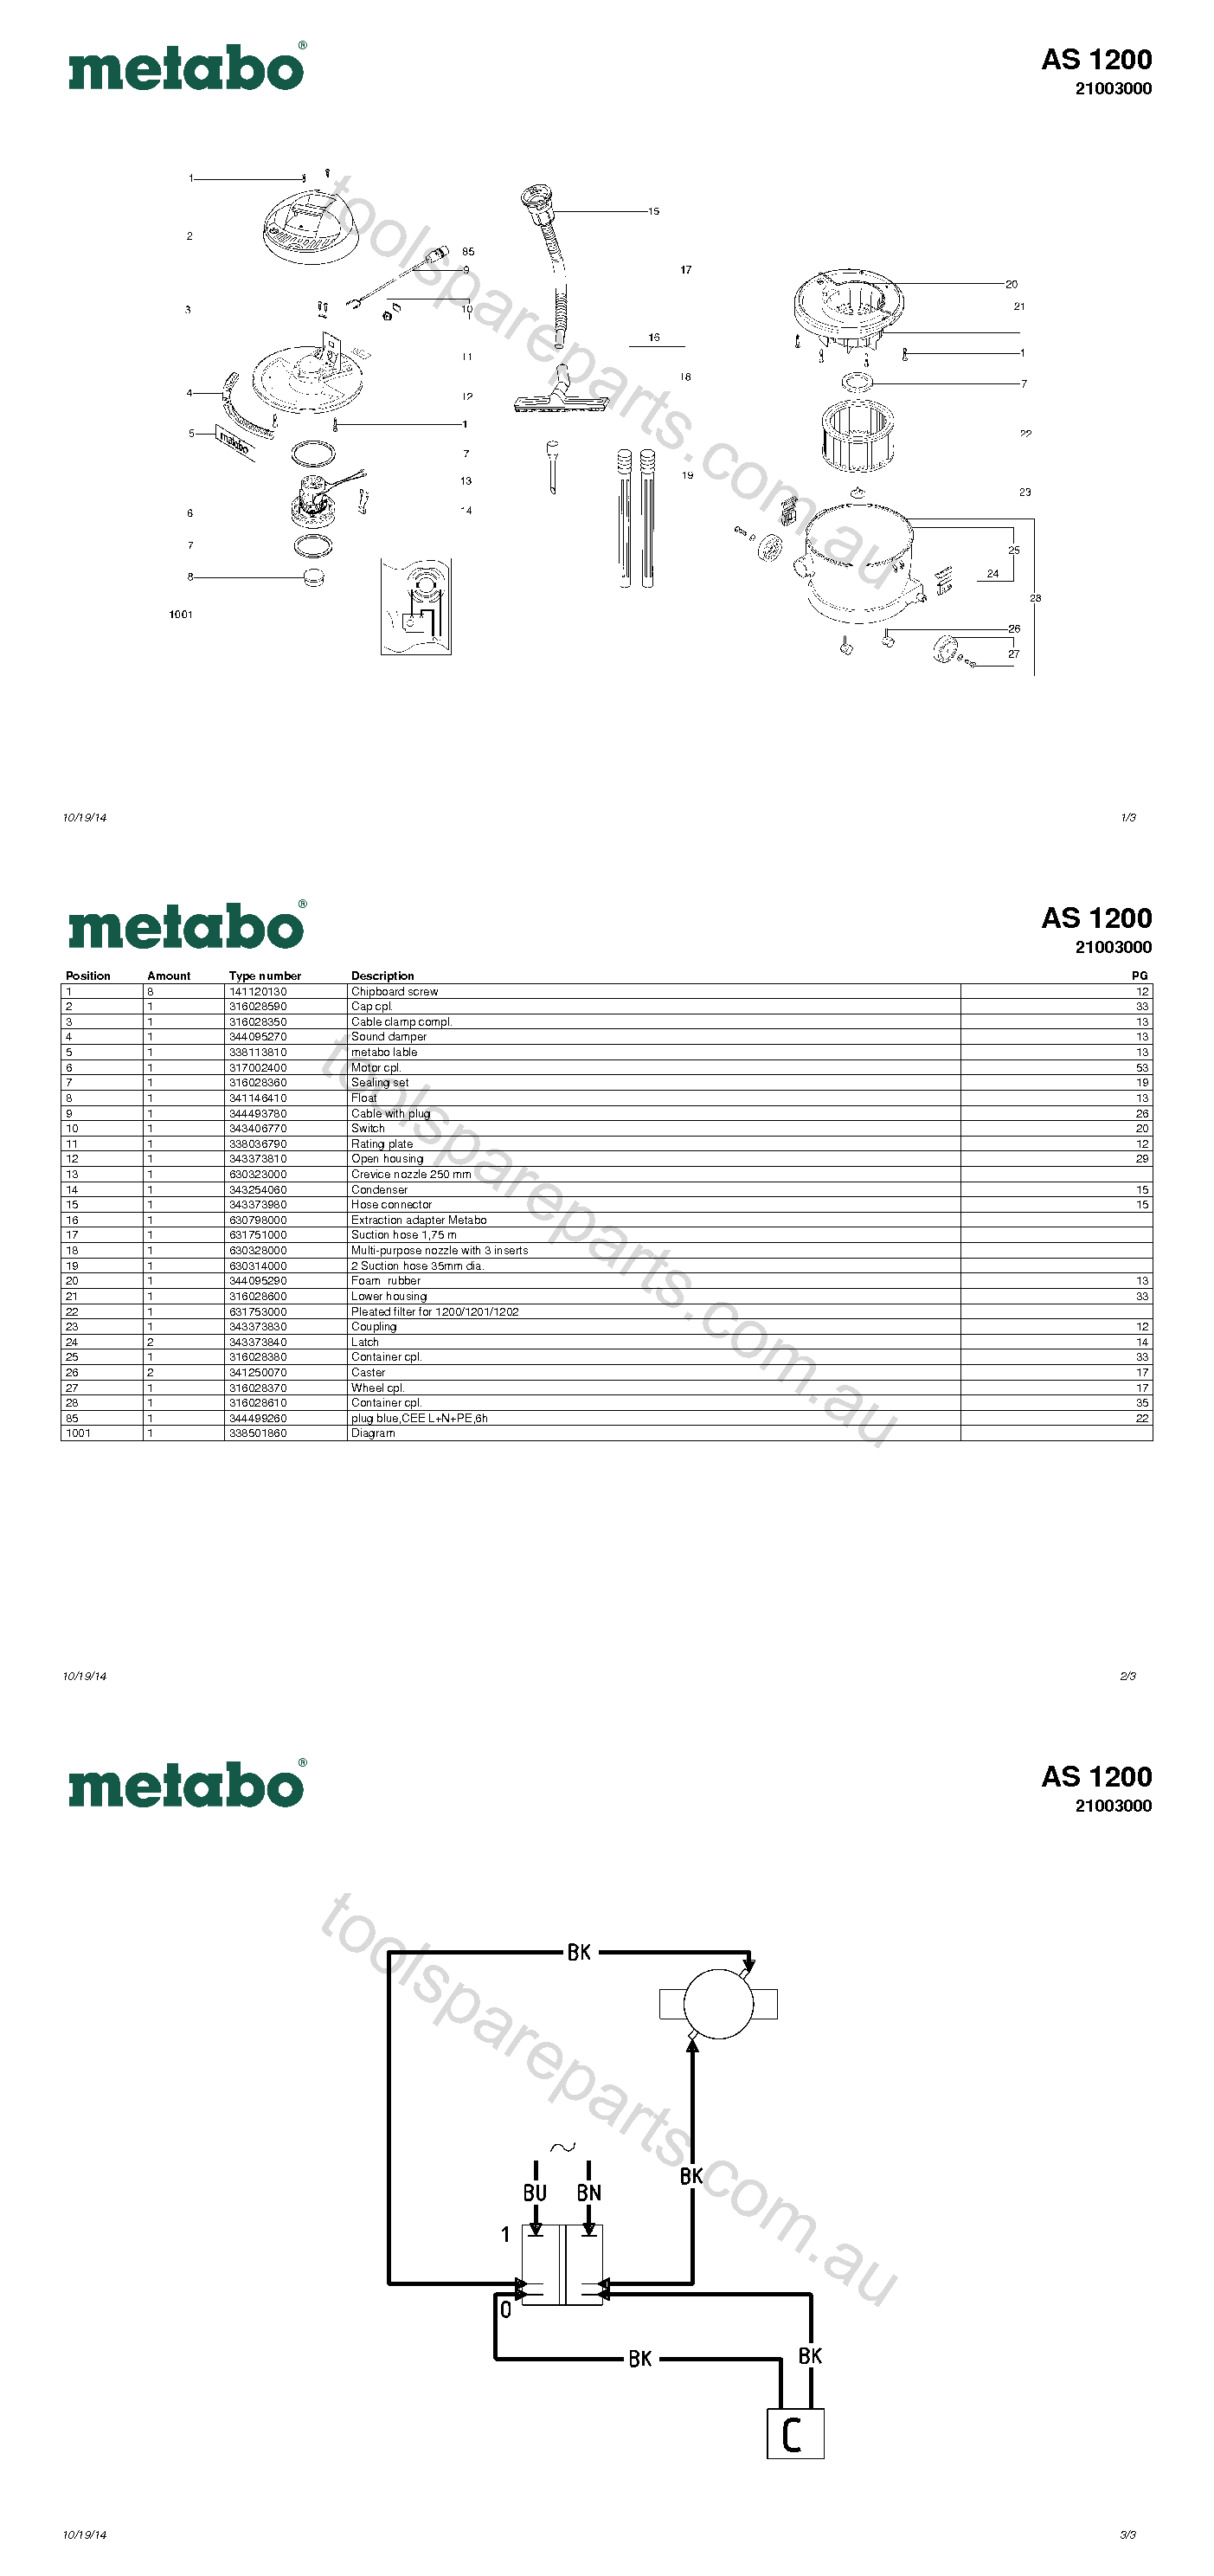 Metabo AS 1200 21003000  Diagram 1